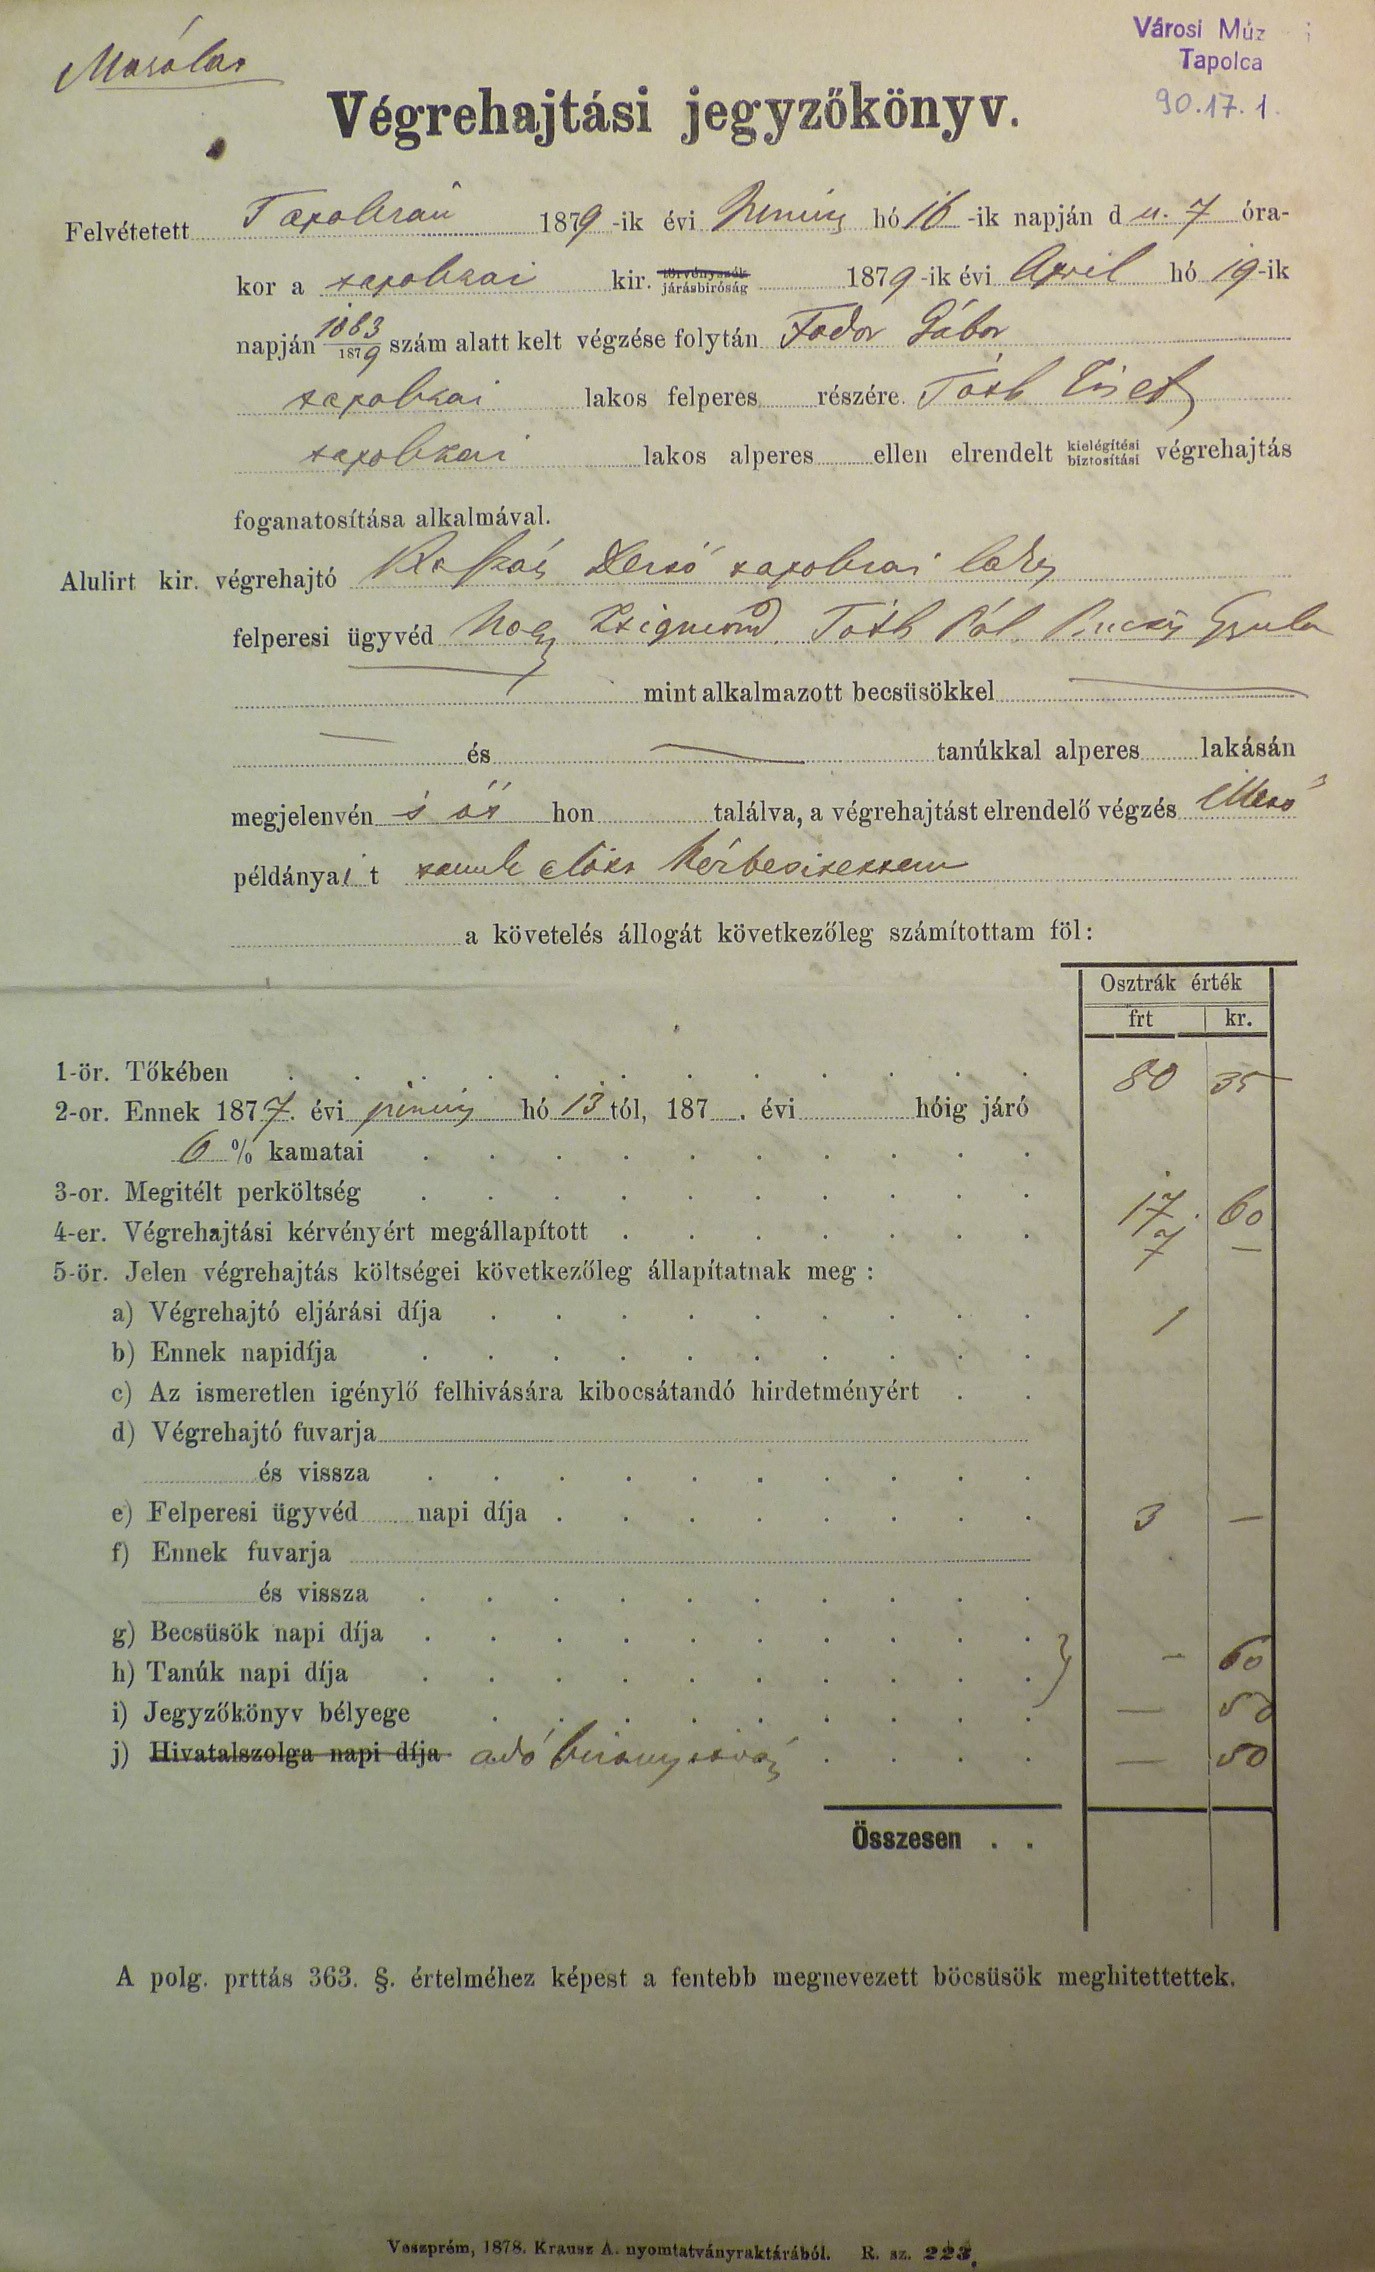 Végrehajtási jegyzőkönyv 1879 (Tapolcai Városi Múzeum CC BY-NC-SA)